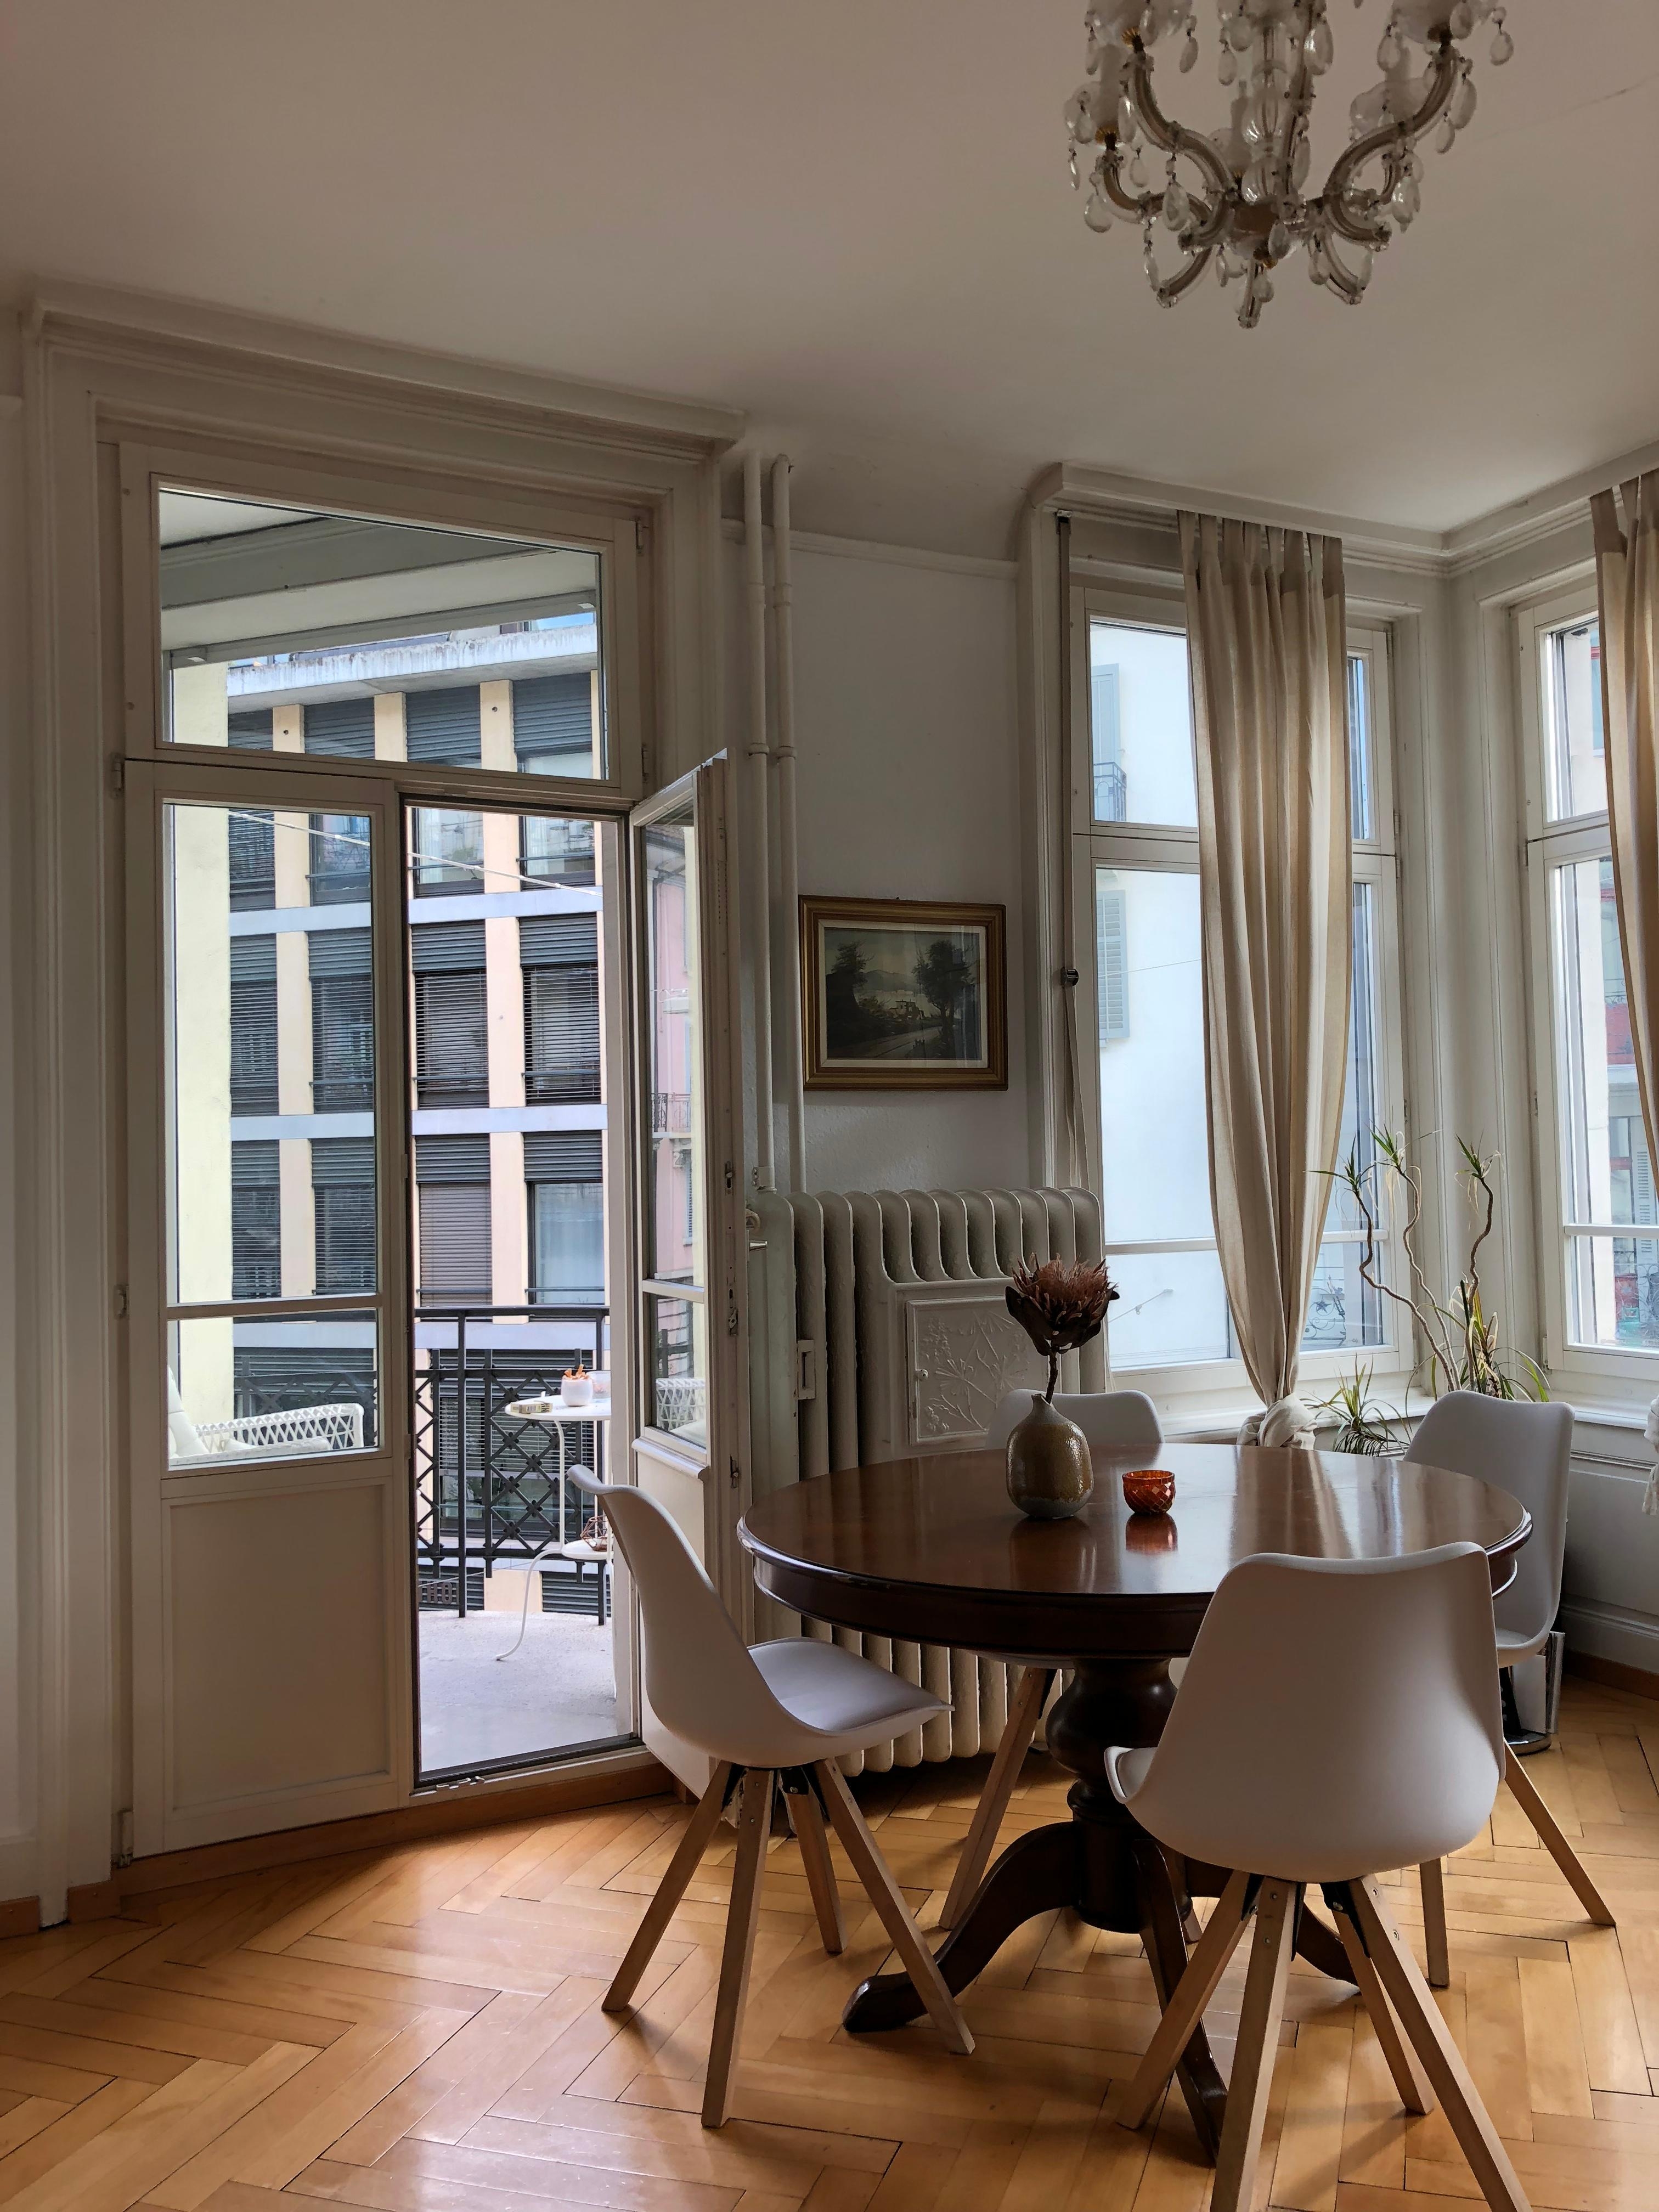 Home sweet home 💌 #luzern #interior #livingroom #altbauliebe